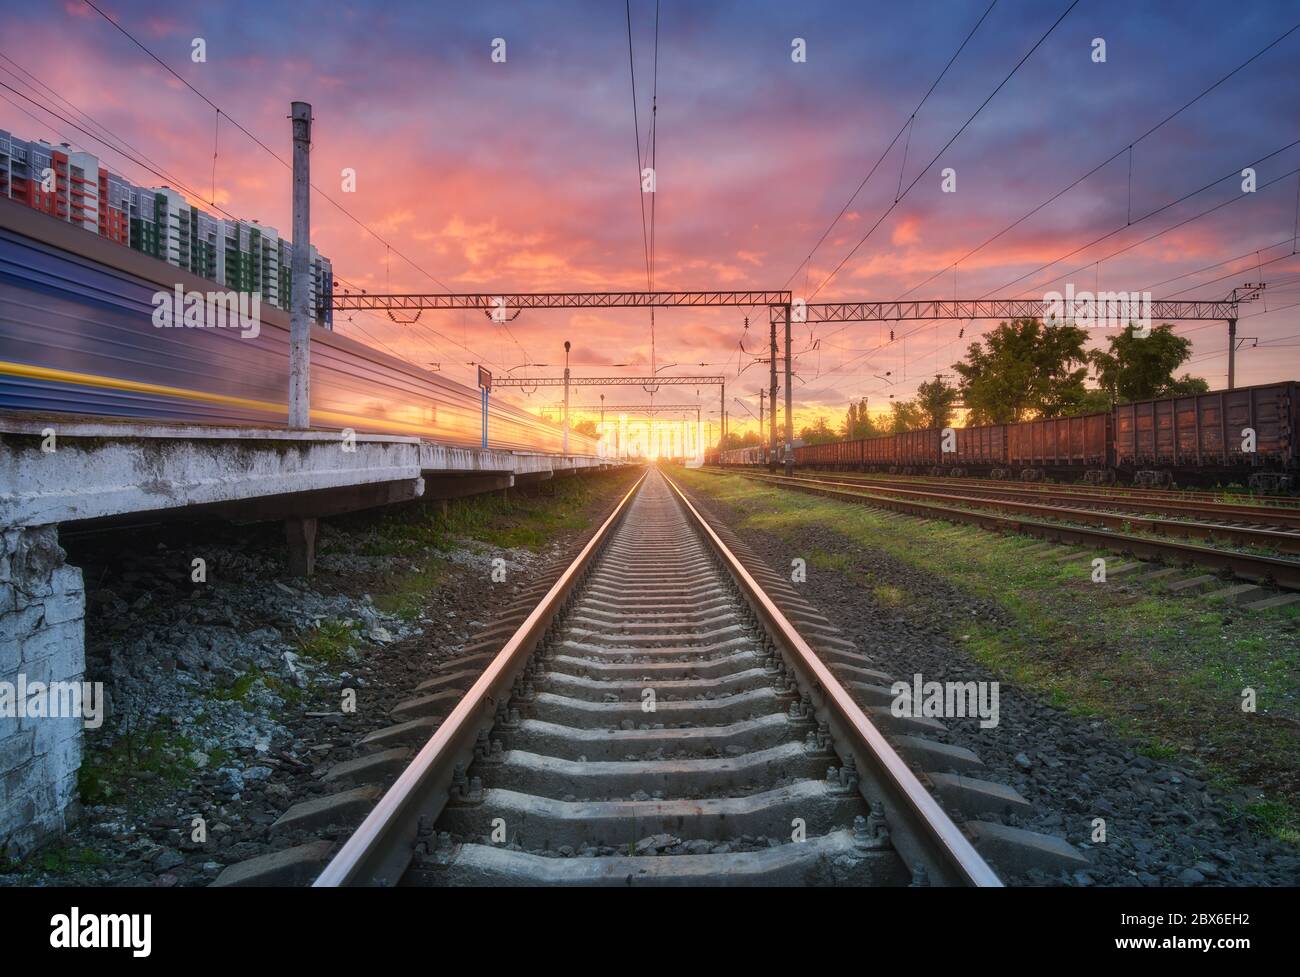 Bahnhof mit Güterzügen bei buntem Sonnenuntergang Stockfoto